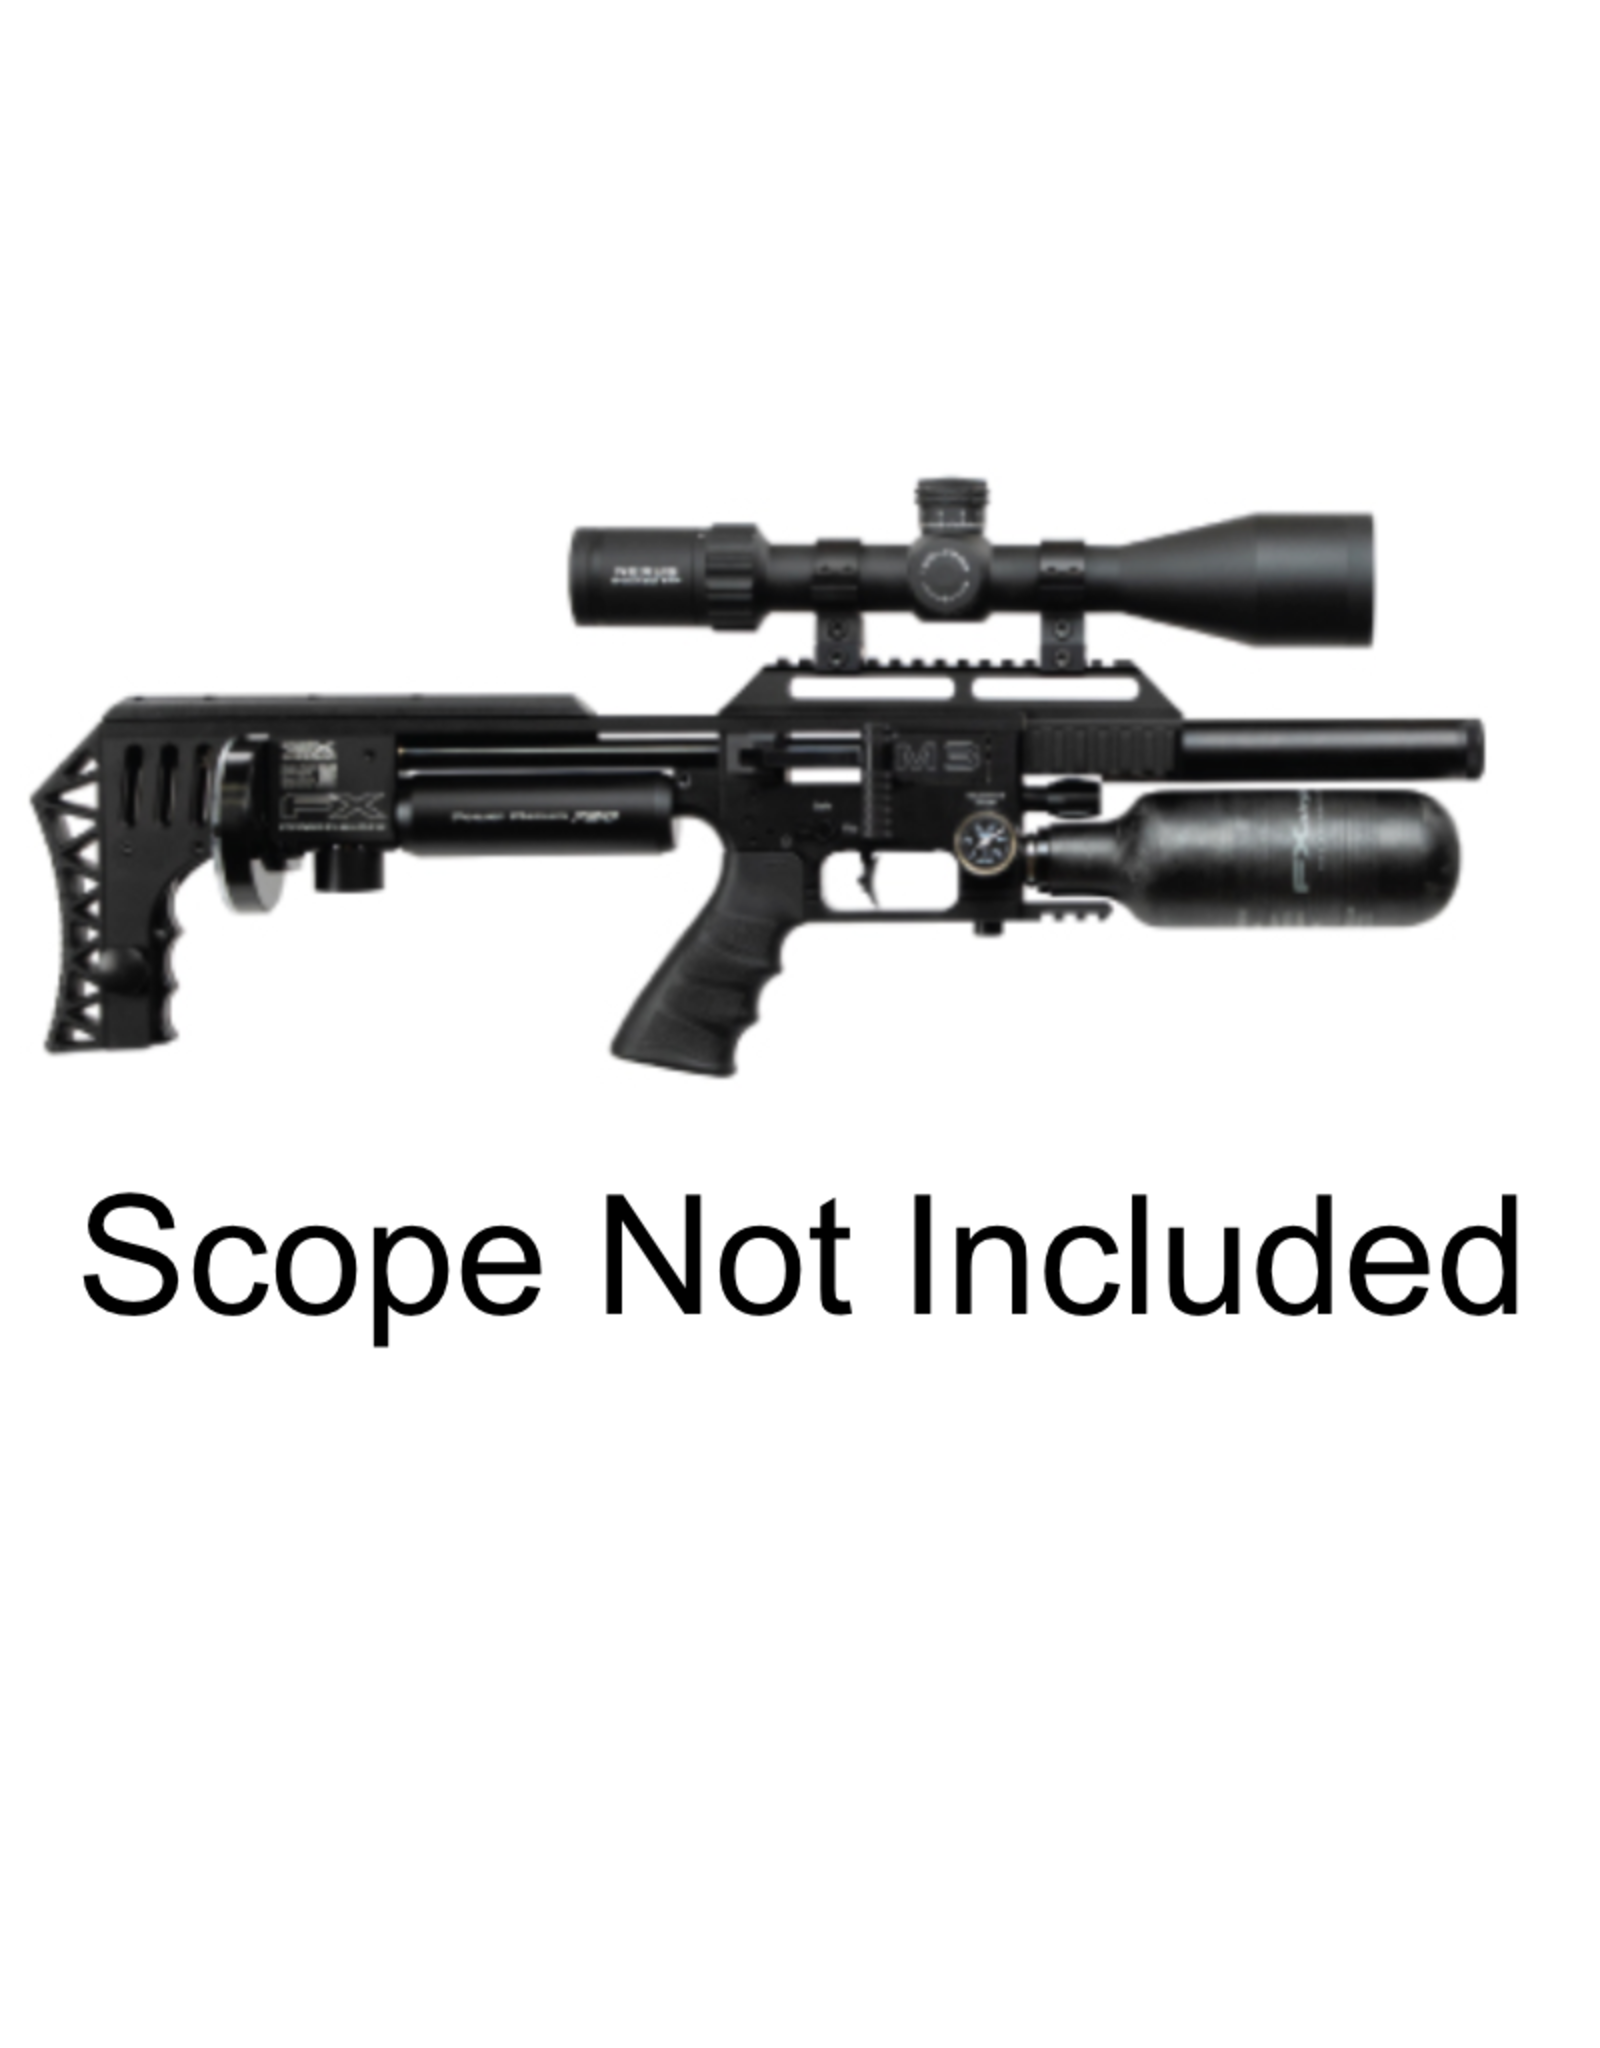 FX Airguns FX Impact M3, Black - Compact - .30 caliber - POWER BLOCK